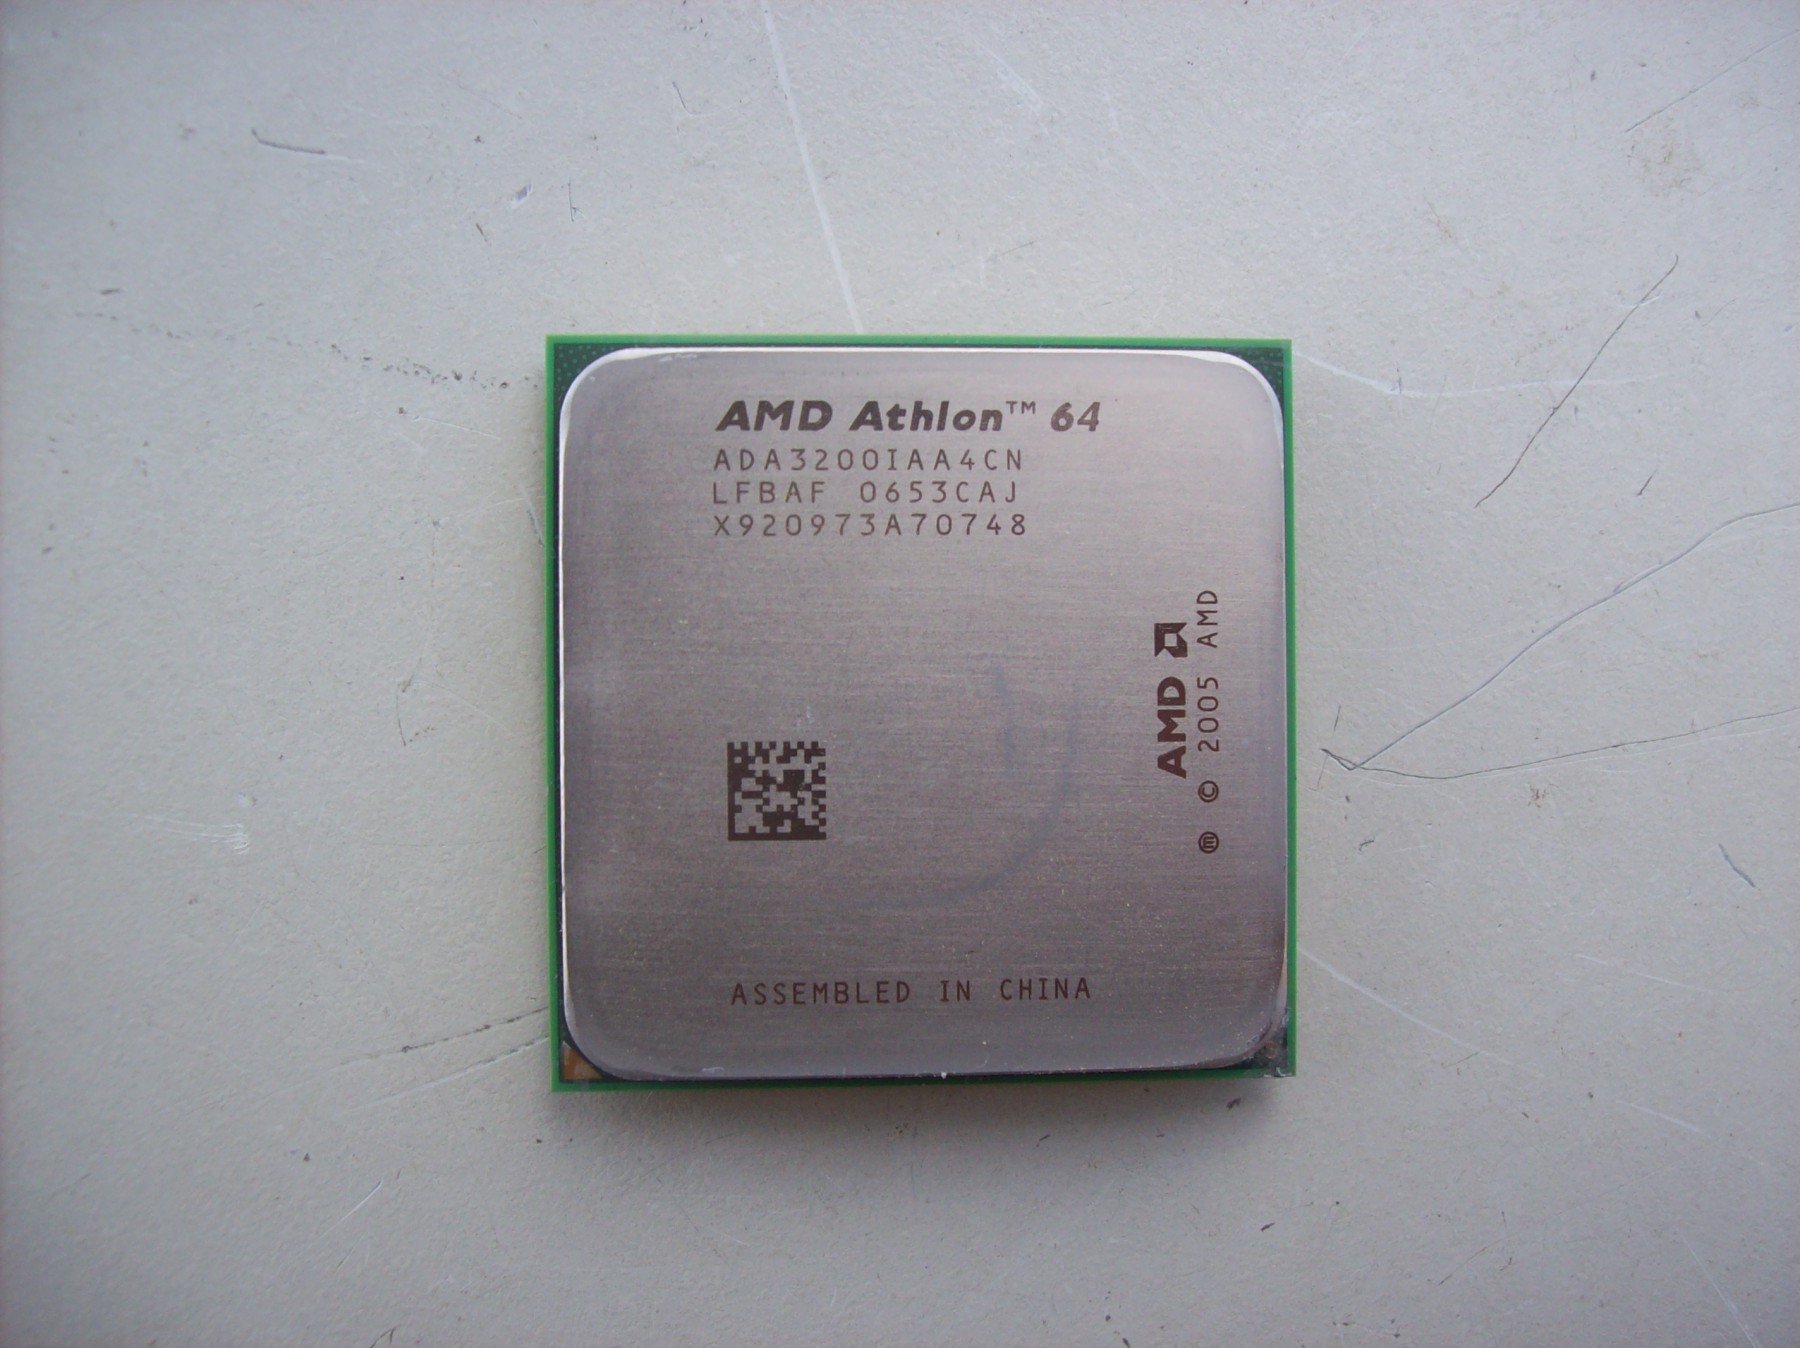 Сравнение amd athlon. AMD Athlon 64 2001 года. Атлон 64 2003 года. ООО Атлон. АМД Атлон 64 ада 3200iaa4cn цена.